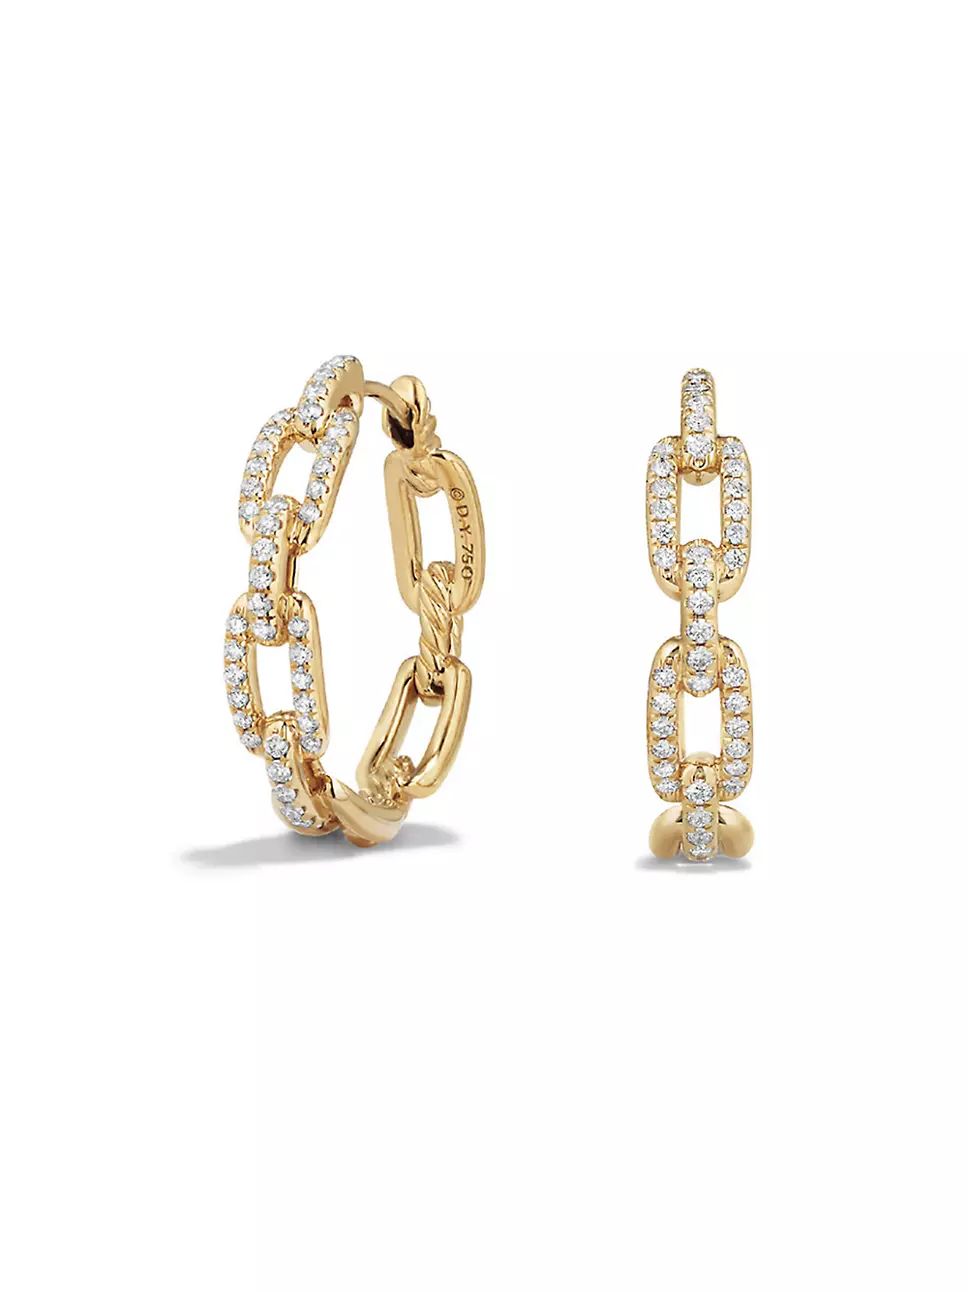 Stax Medium Chain Link Hoop Earrings with Diamonds in 18K Gold | Saks Fifth Avenue